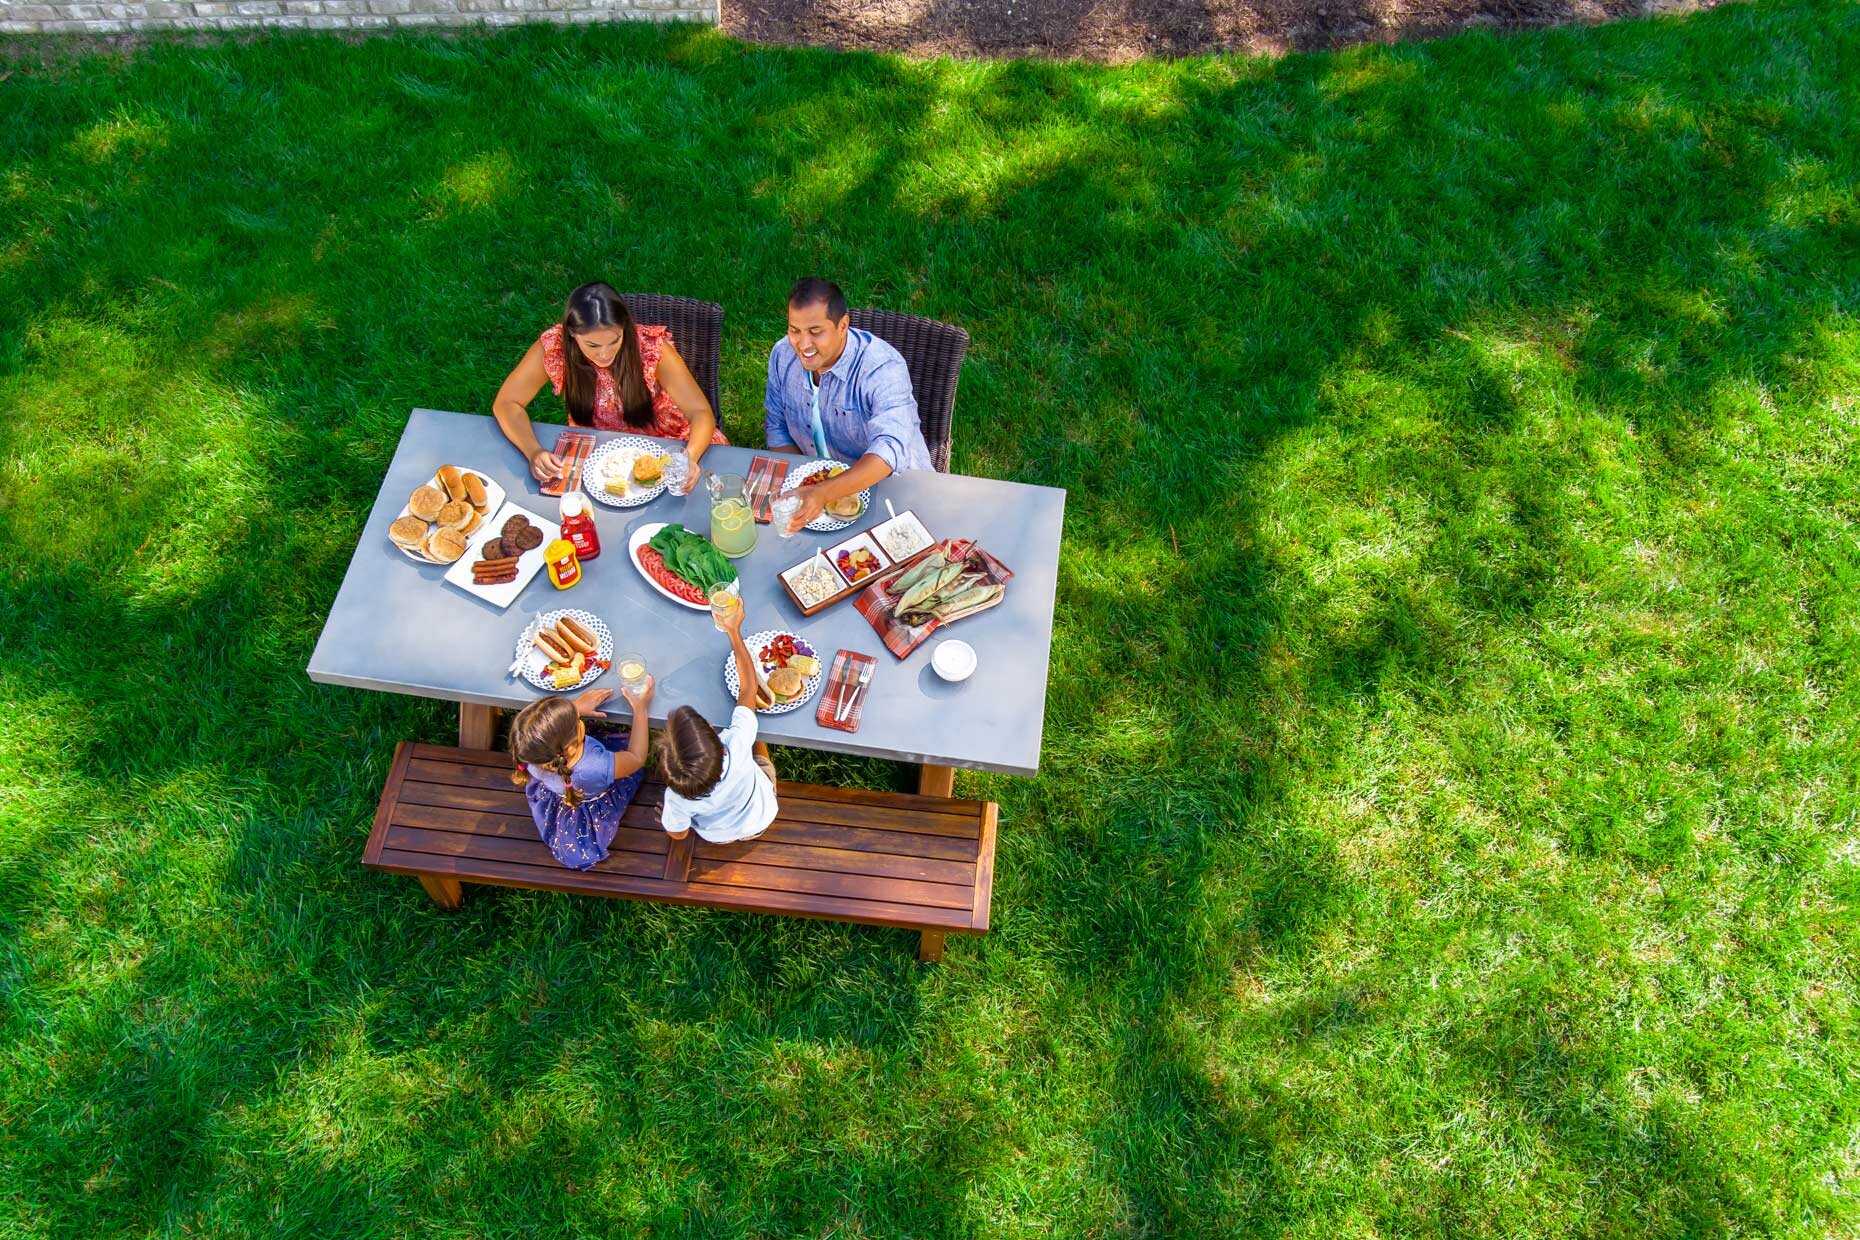 200922_overhead-view-family-at-backyard-picnic-table_Robert_Holland.jpg